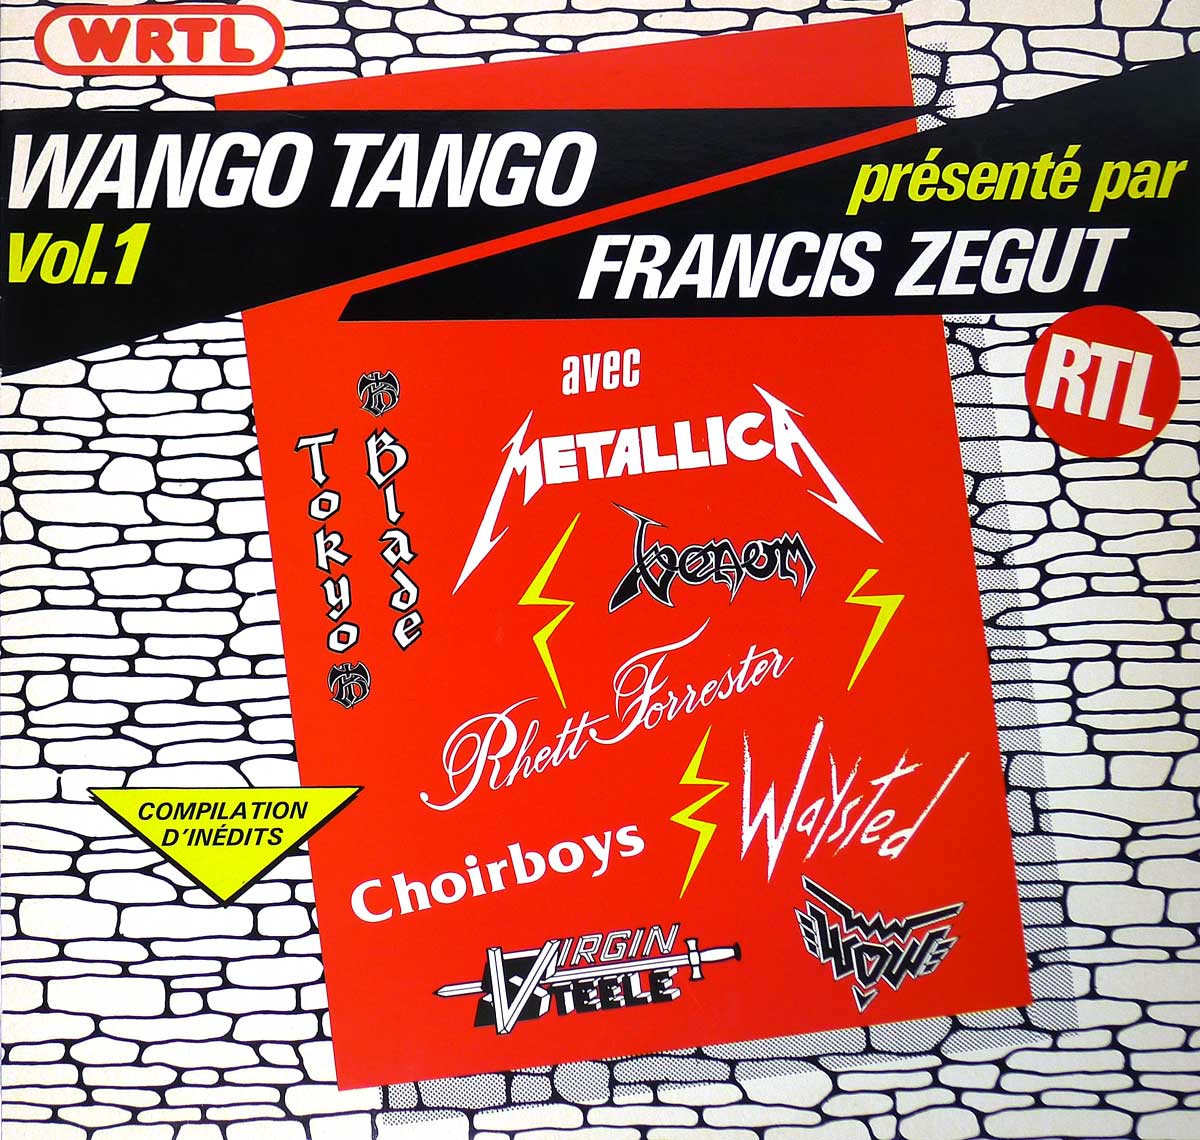 High Quality Photo of Album Front Cover  "Wango Tango Vol 1."